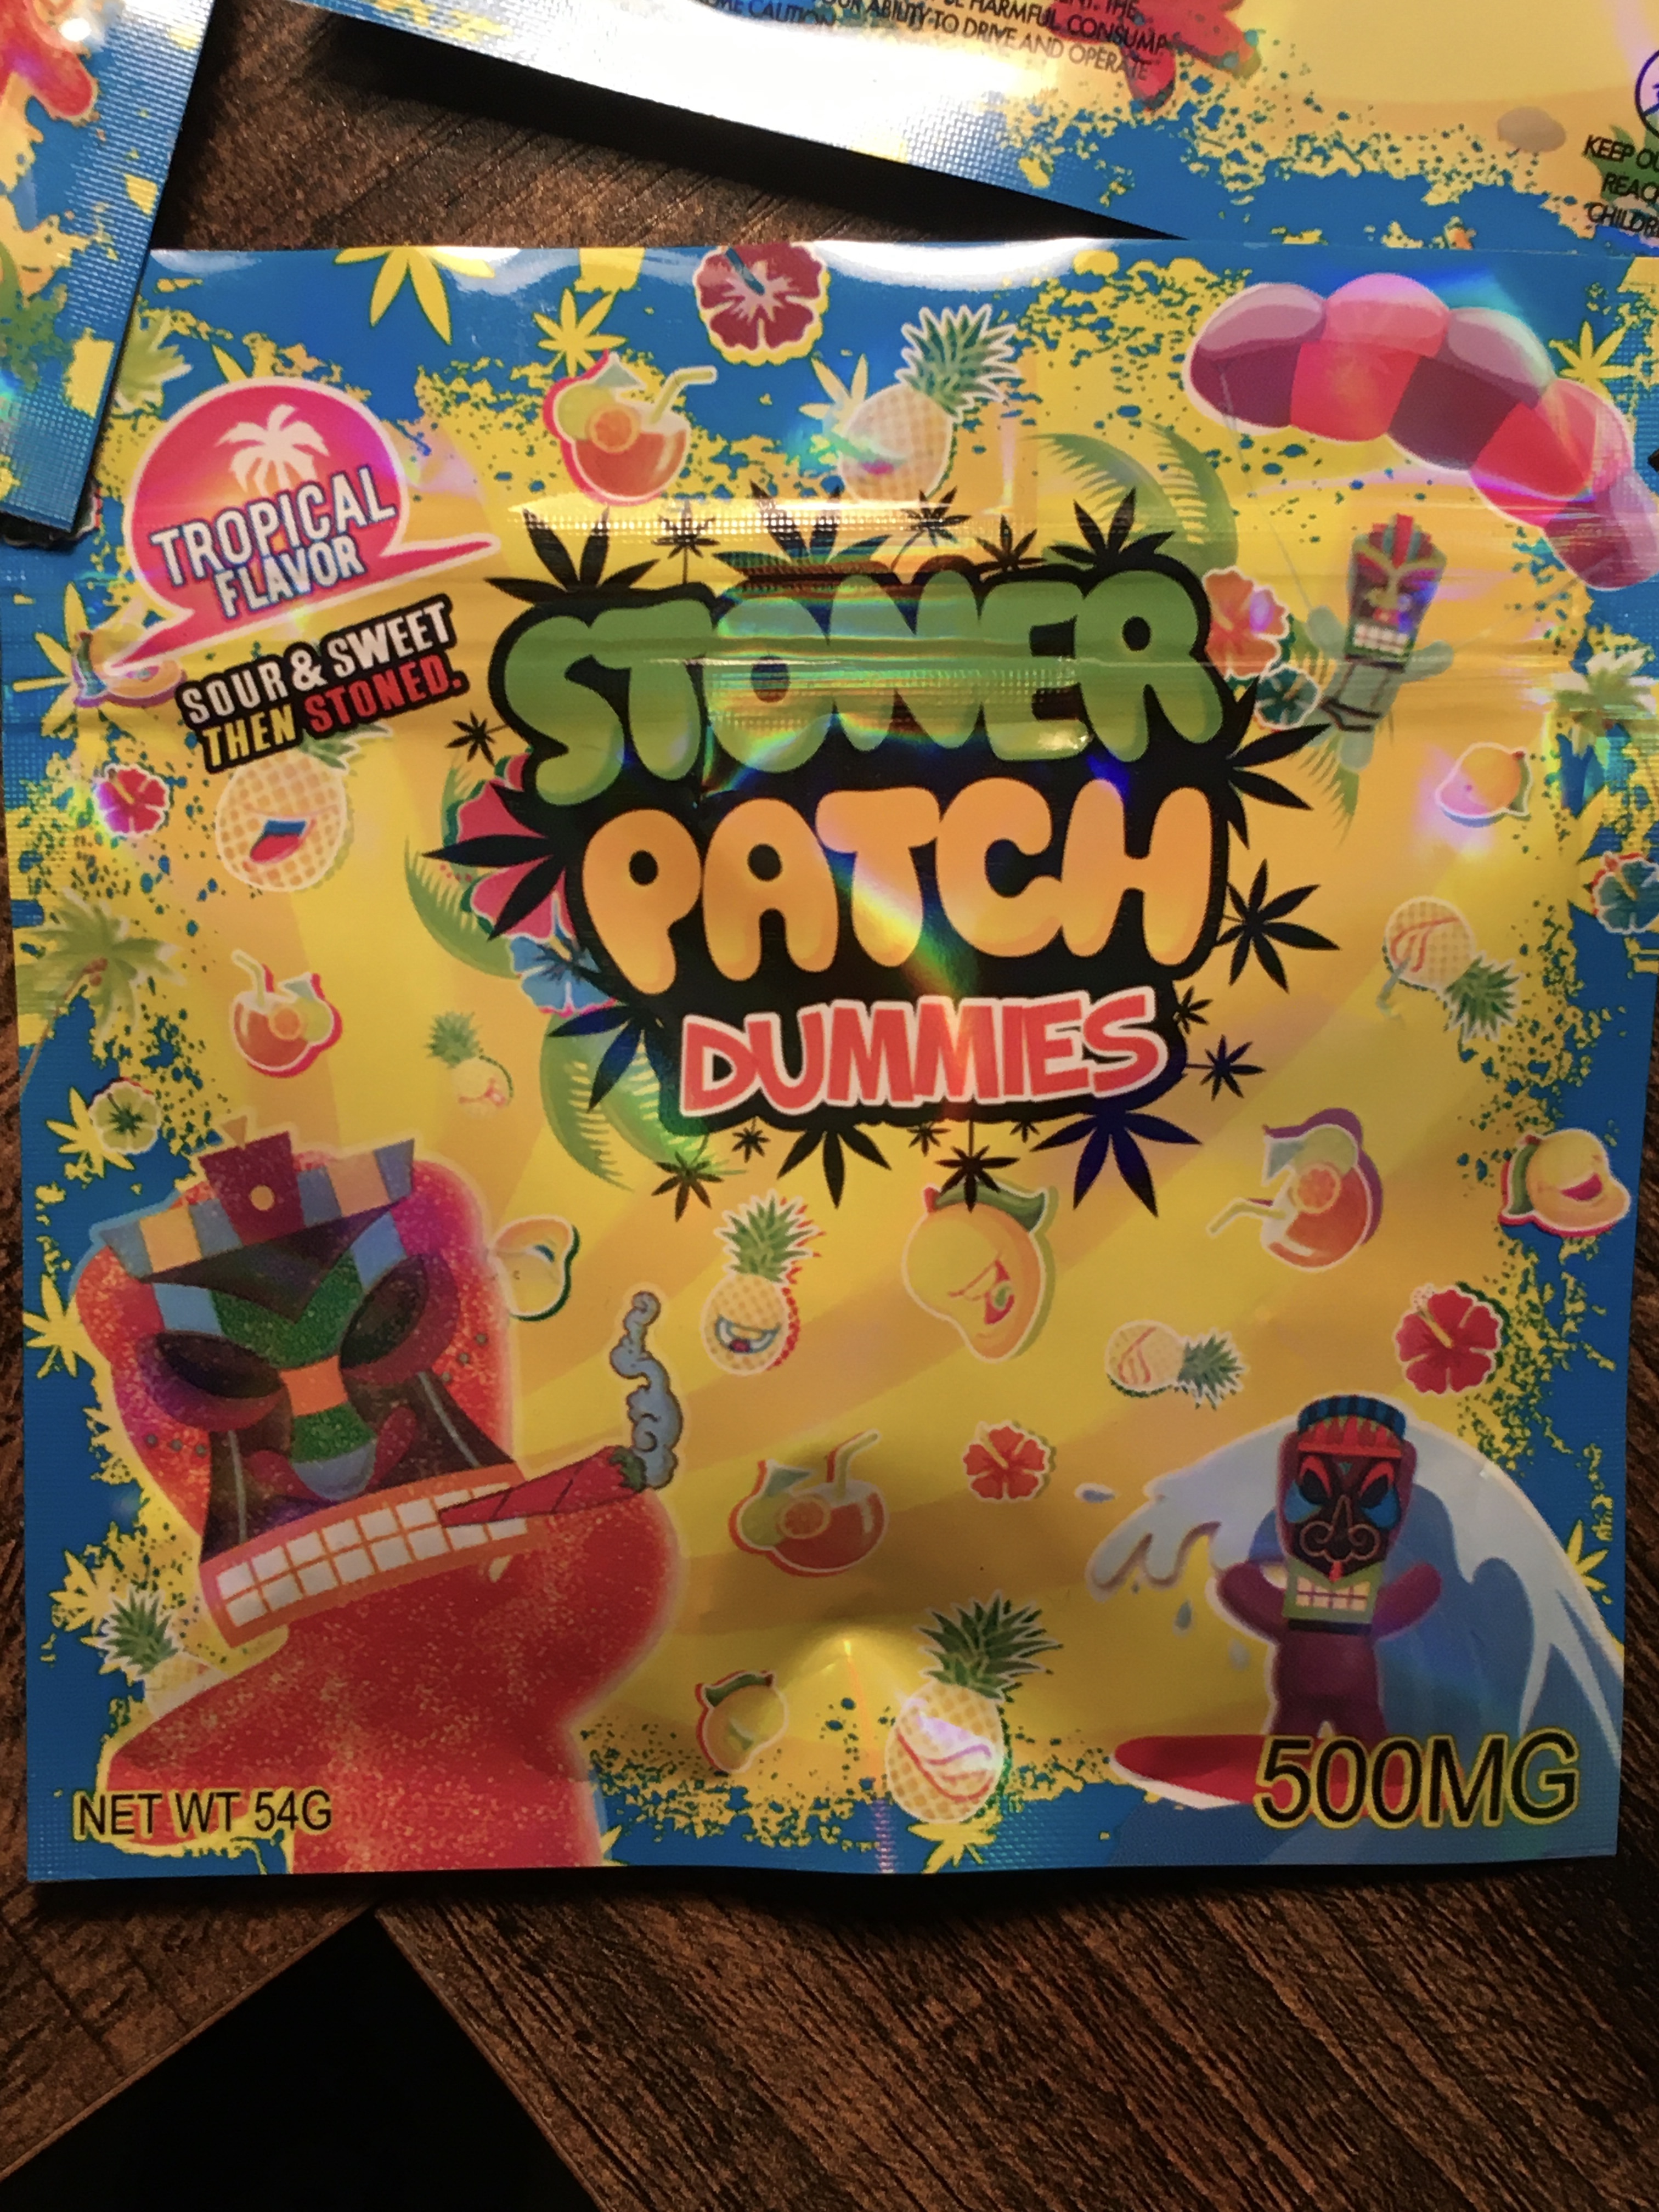 Stoner Patch Dummies 500mgs - Cannabis Menu by Skunk90 - Cannabis in ...